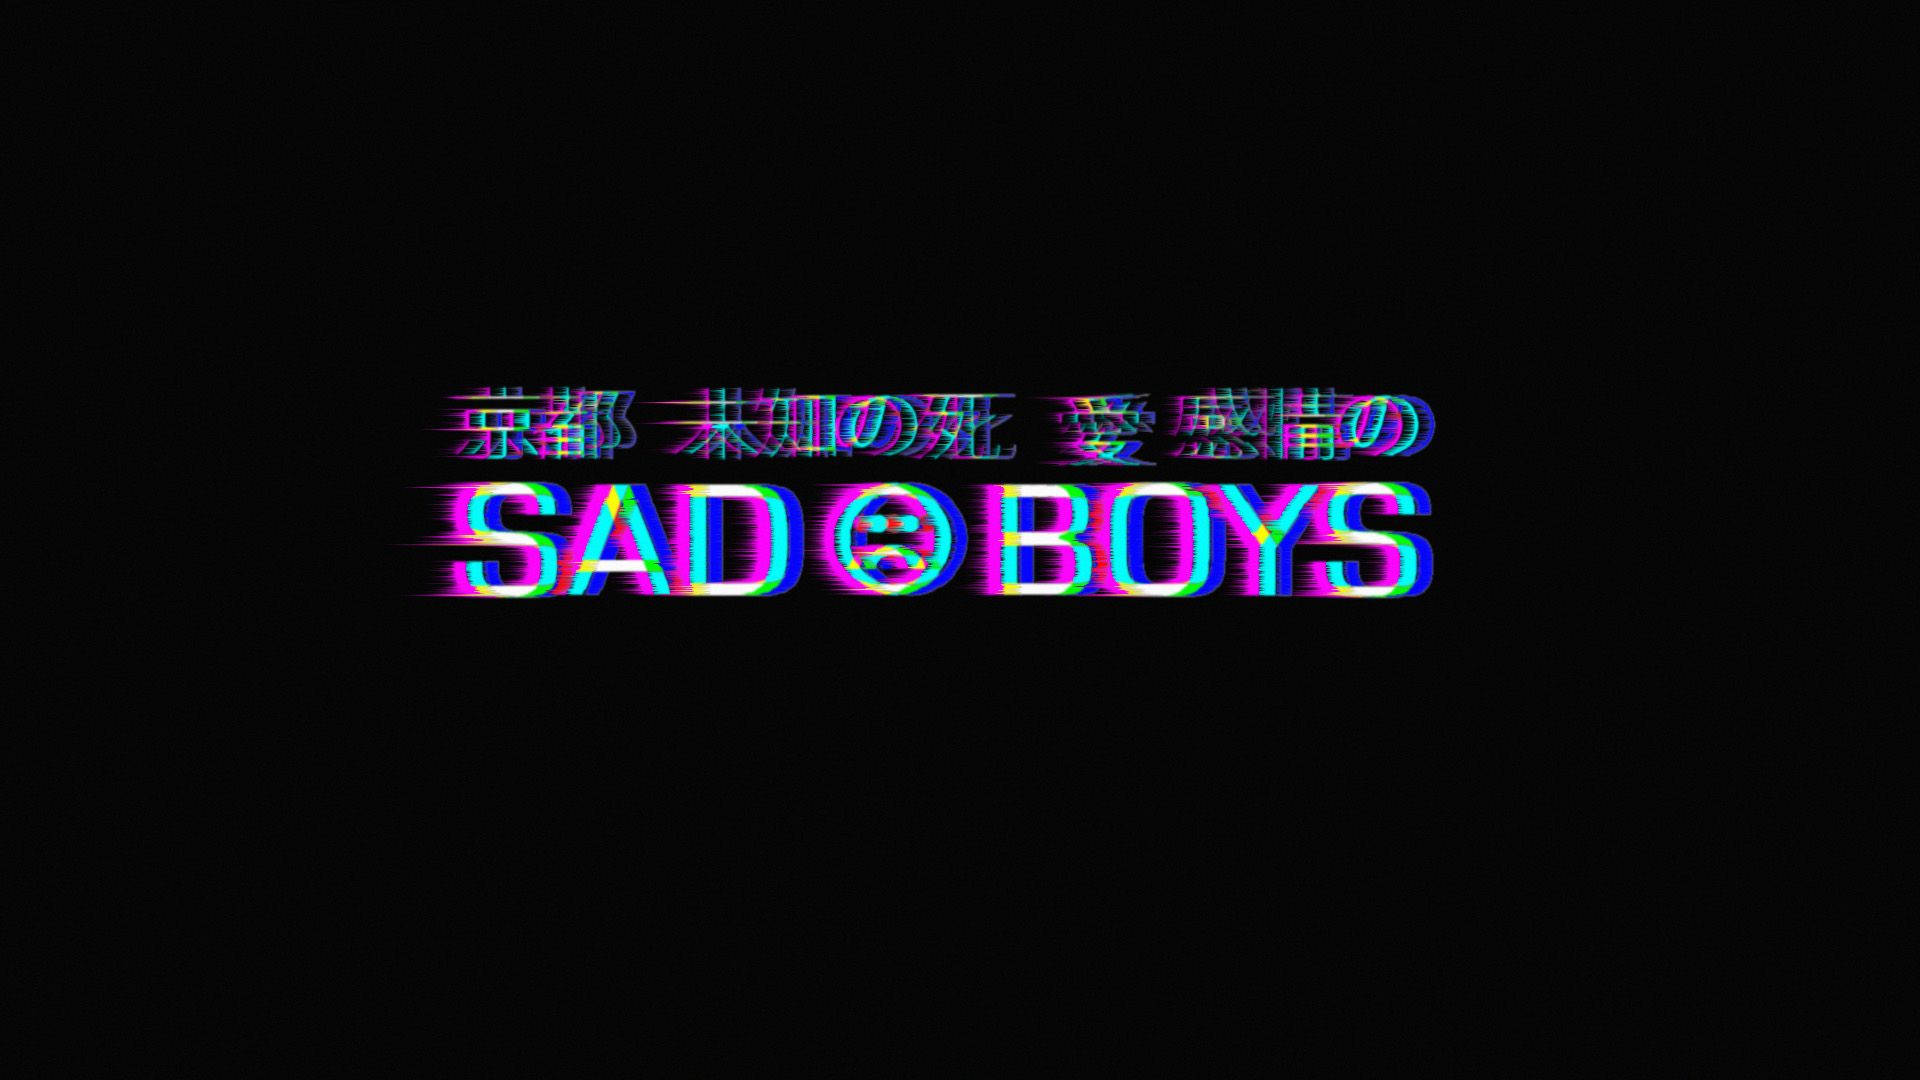 Glitch Sad Boys Text Aesthetic